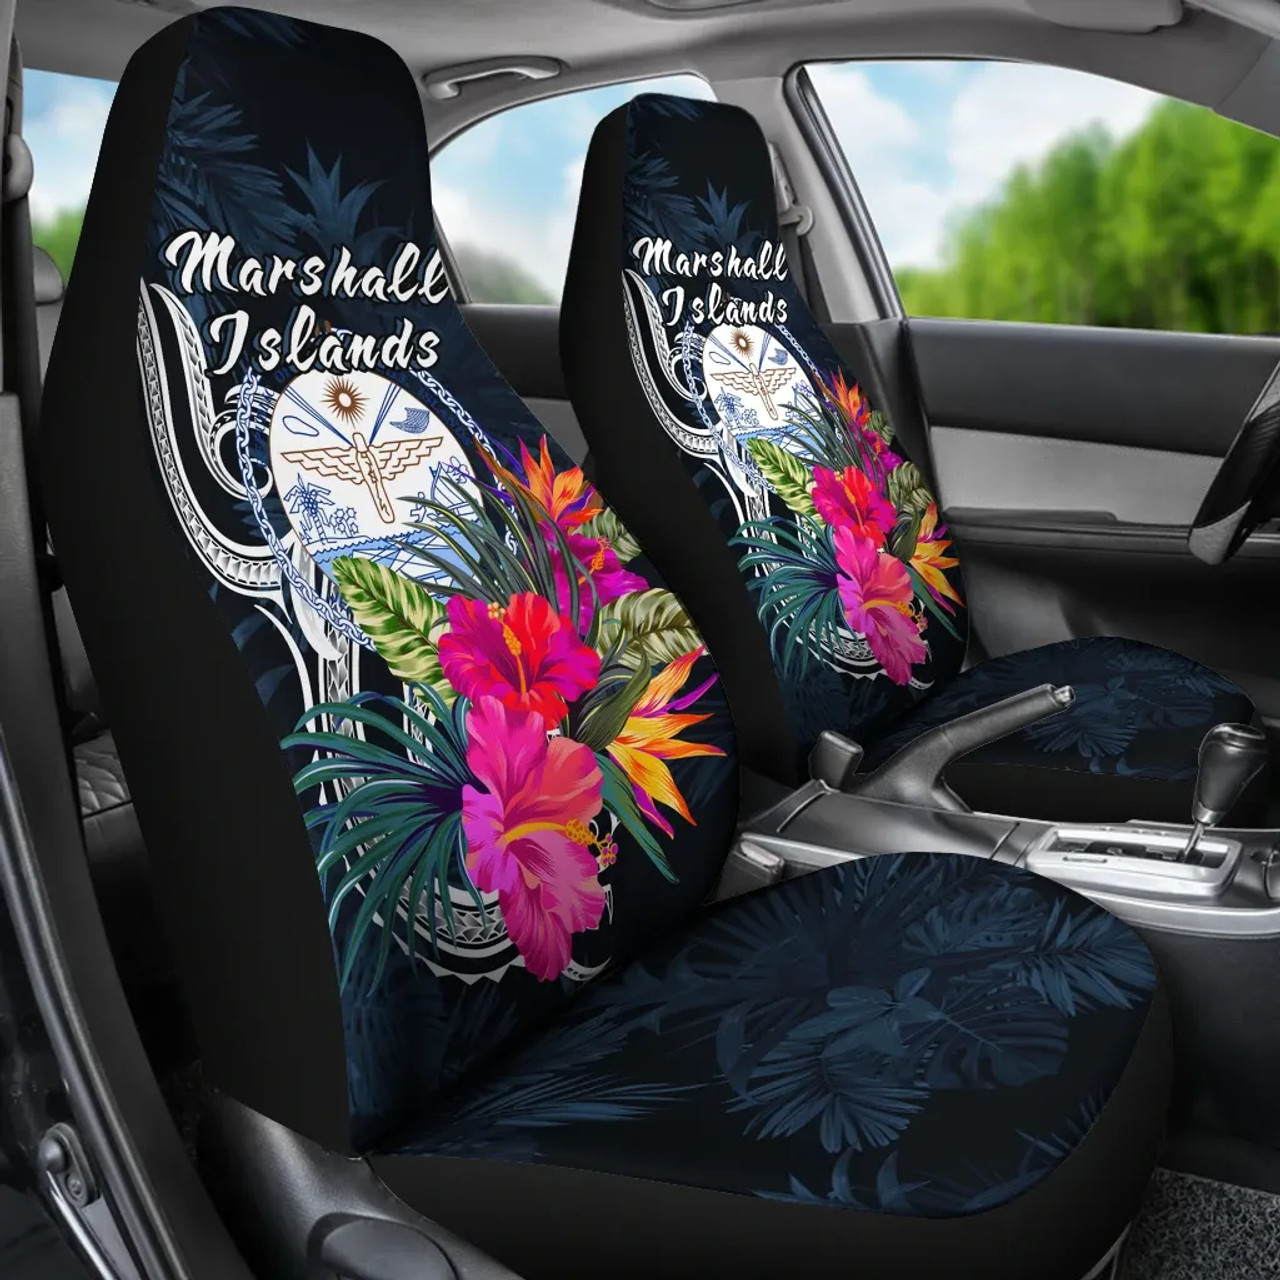 Marshall Islands Polynesian Car Seat Covers - Tropical Flower